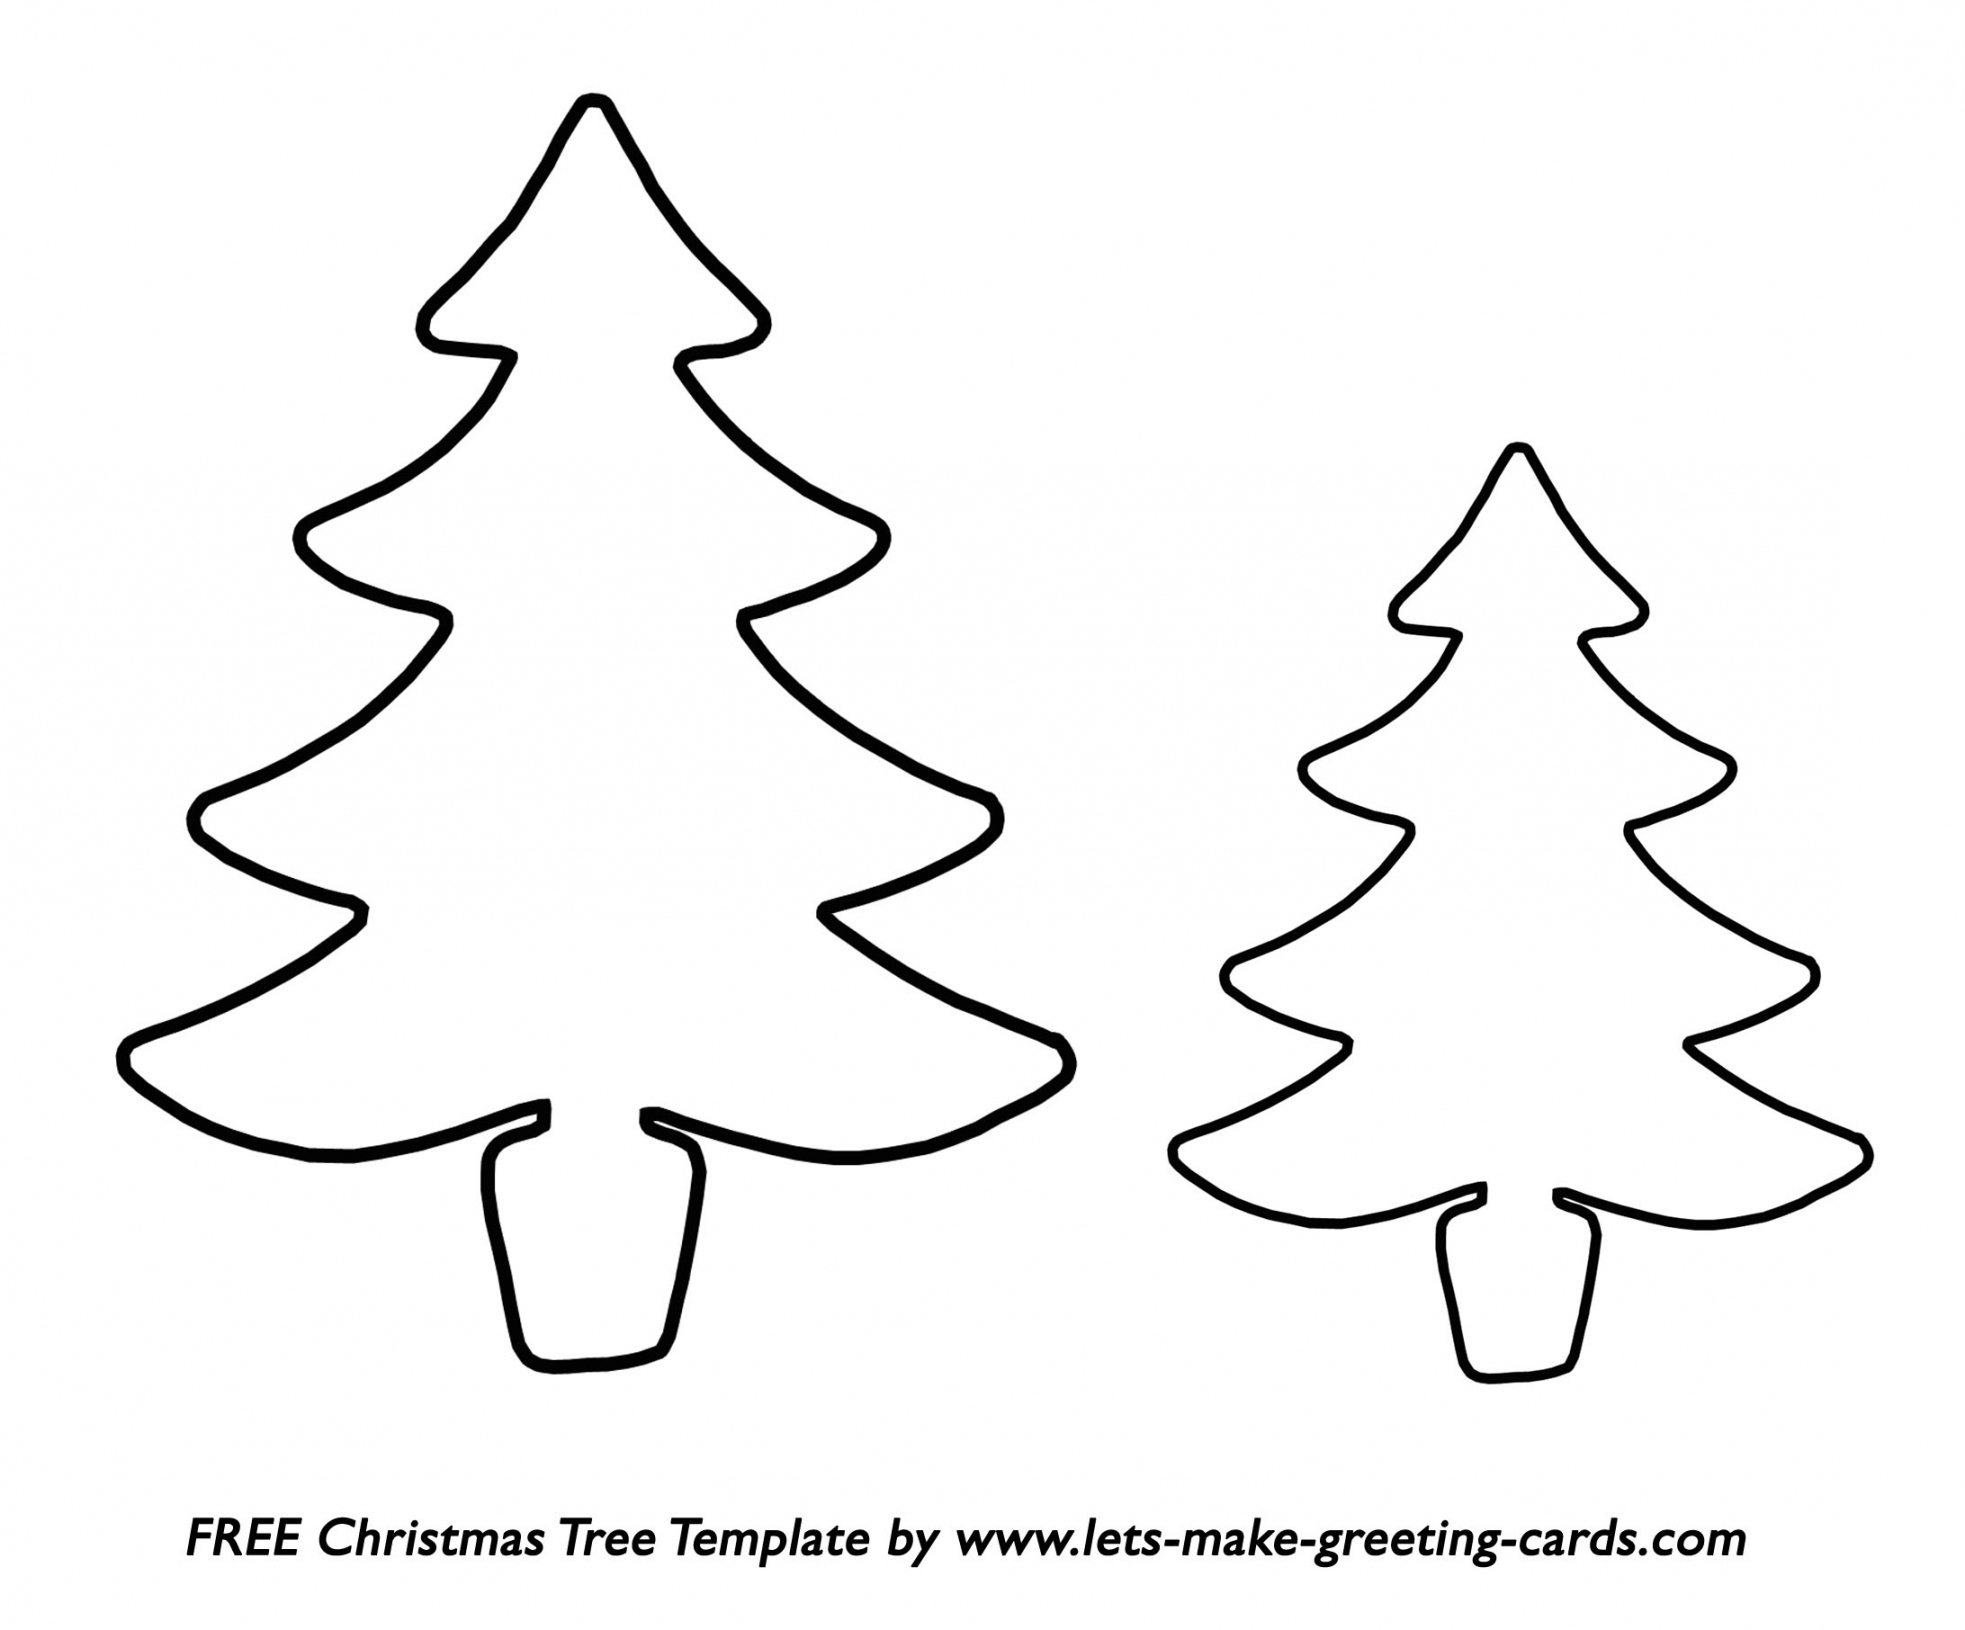 Free Christmas Tree Templates - FREE Printables - Pine Tree Template